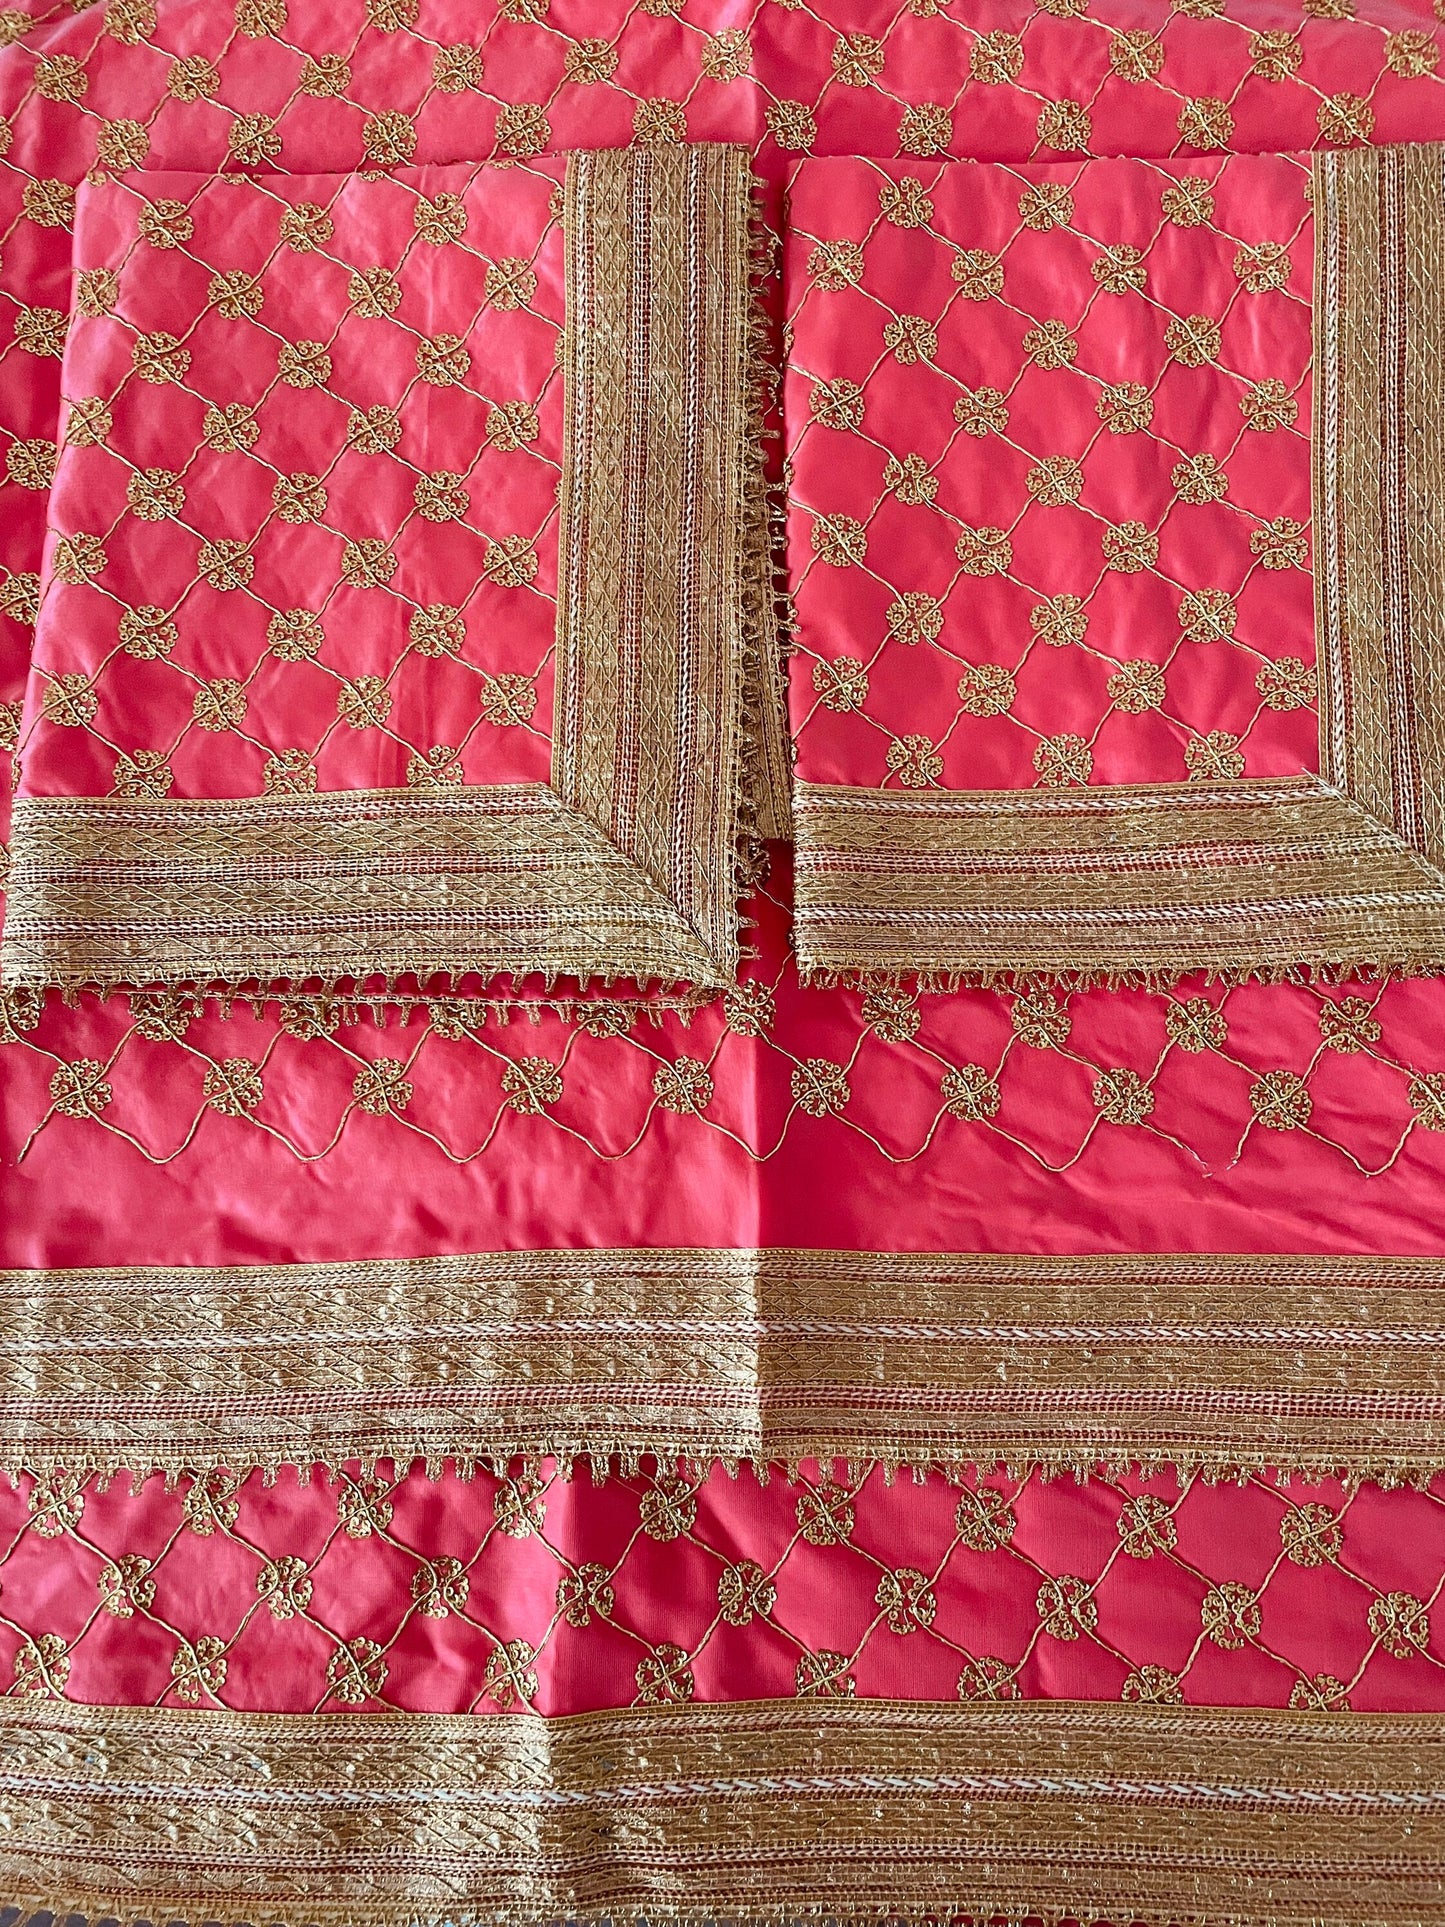 Guru Granth Sahib Rumala Sahib Set 4 pcs. Embroidered Double Set with 2 Palkan Sikh Fully Lined 9 colours Punjabi Gurudwara Wedding Newhome